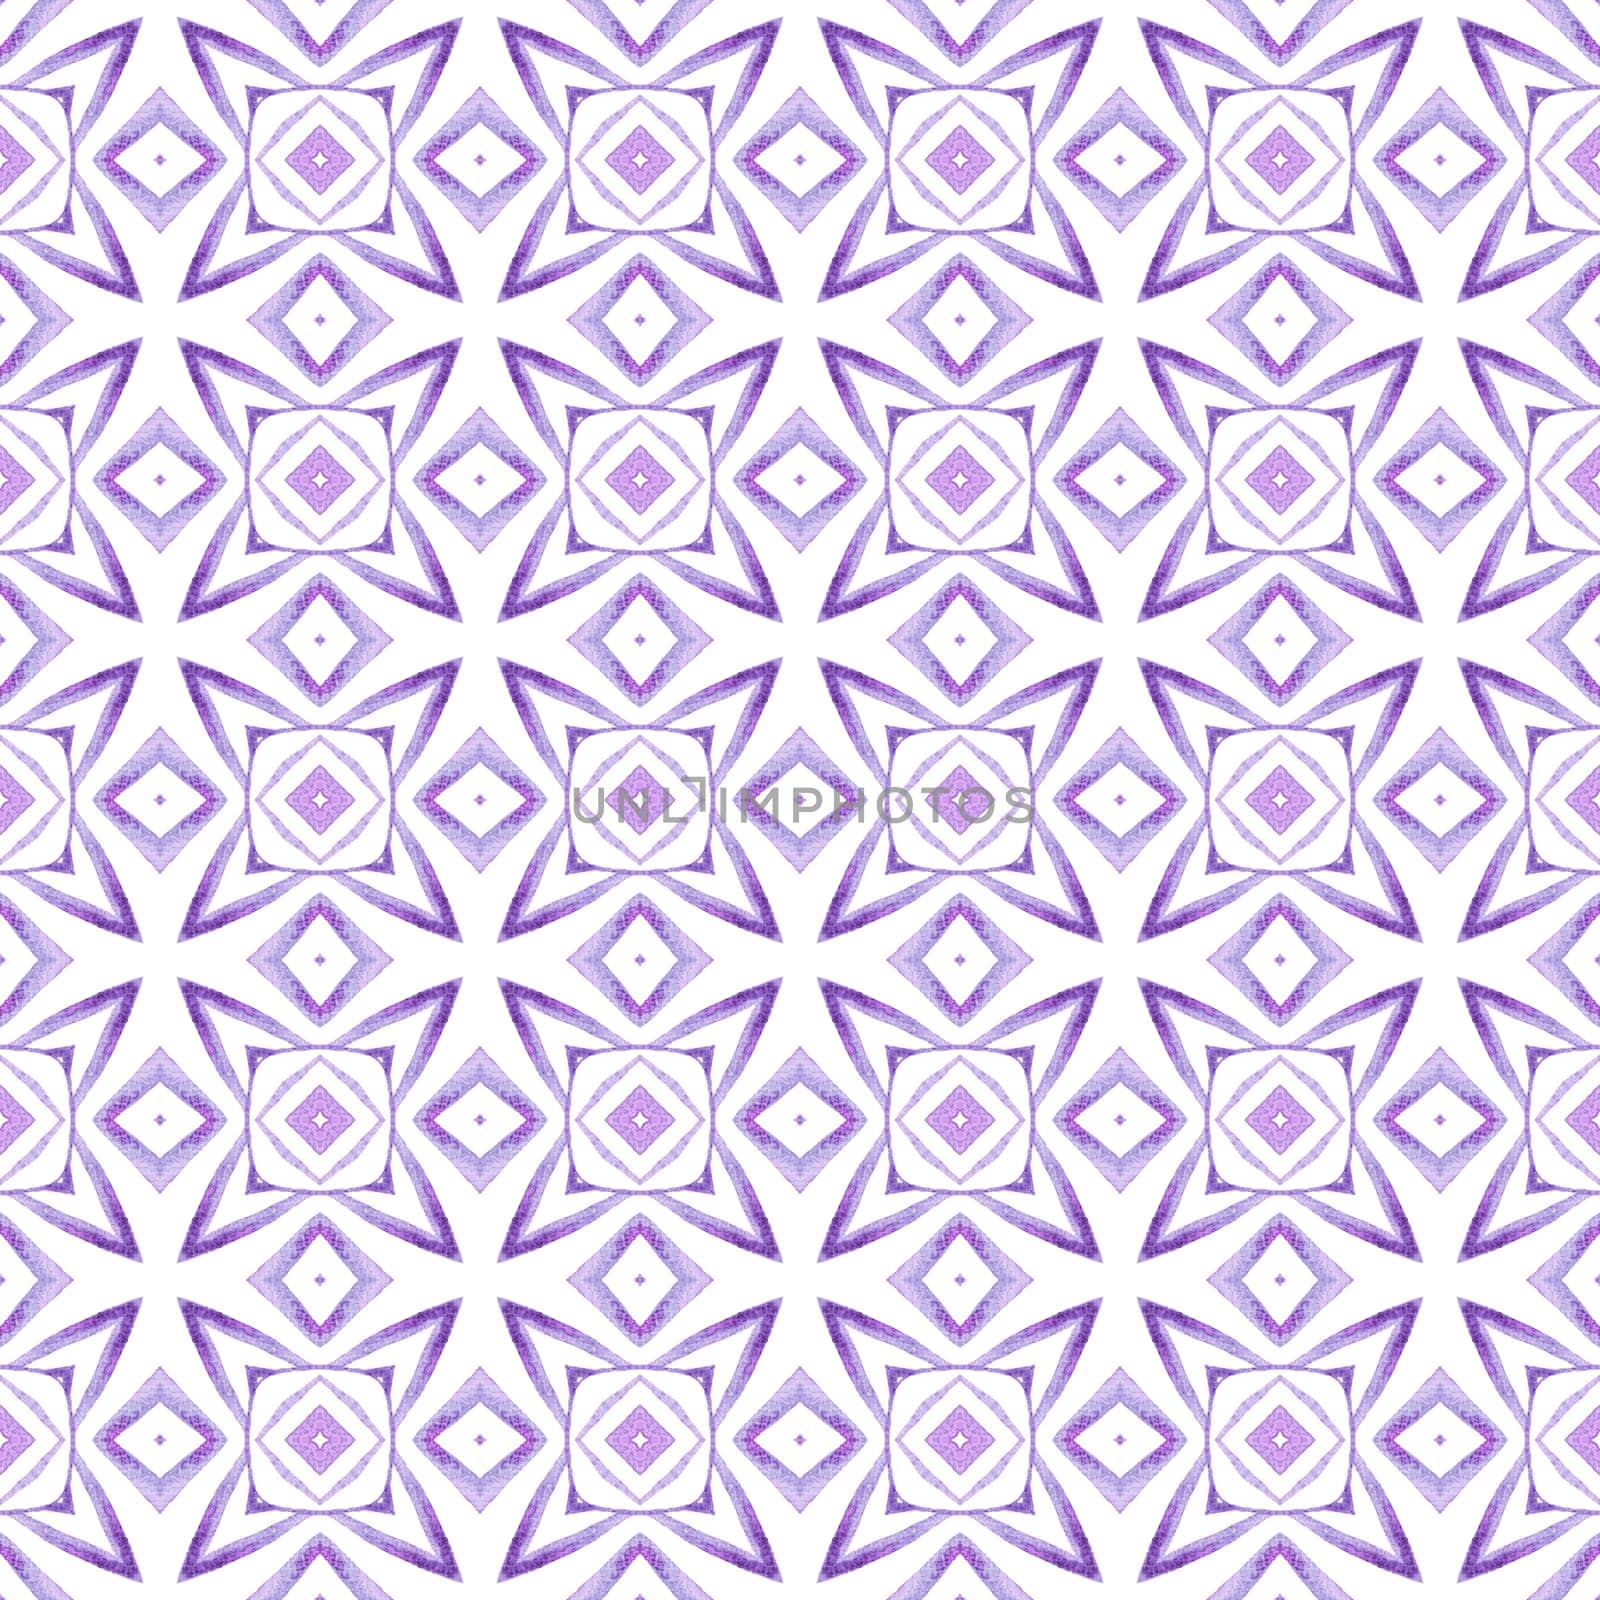 Textile ready charming print, swimwear fabric, wallpaper, wrapping. Purple optimal boho chic summer design. Oriental arabesque hand drawn border. Arabesque hand drawn design.